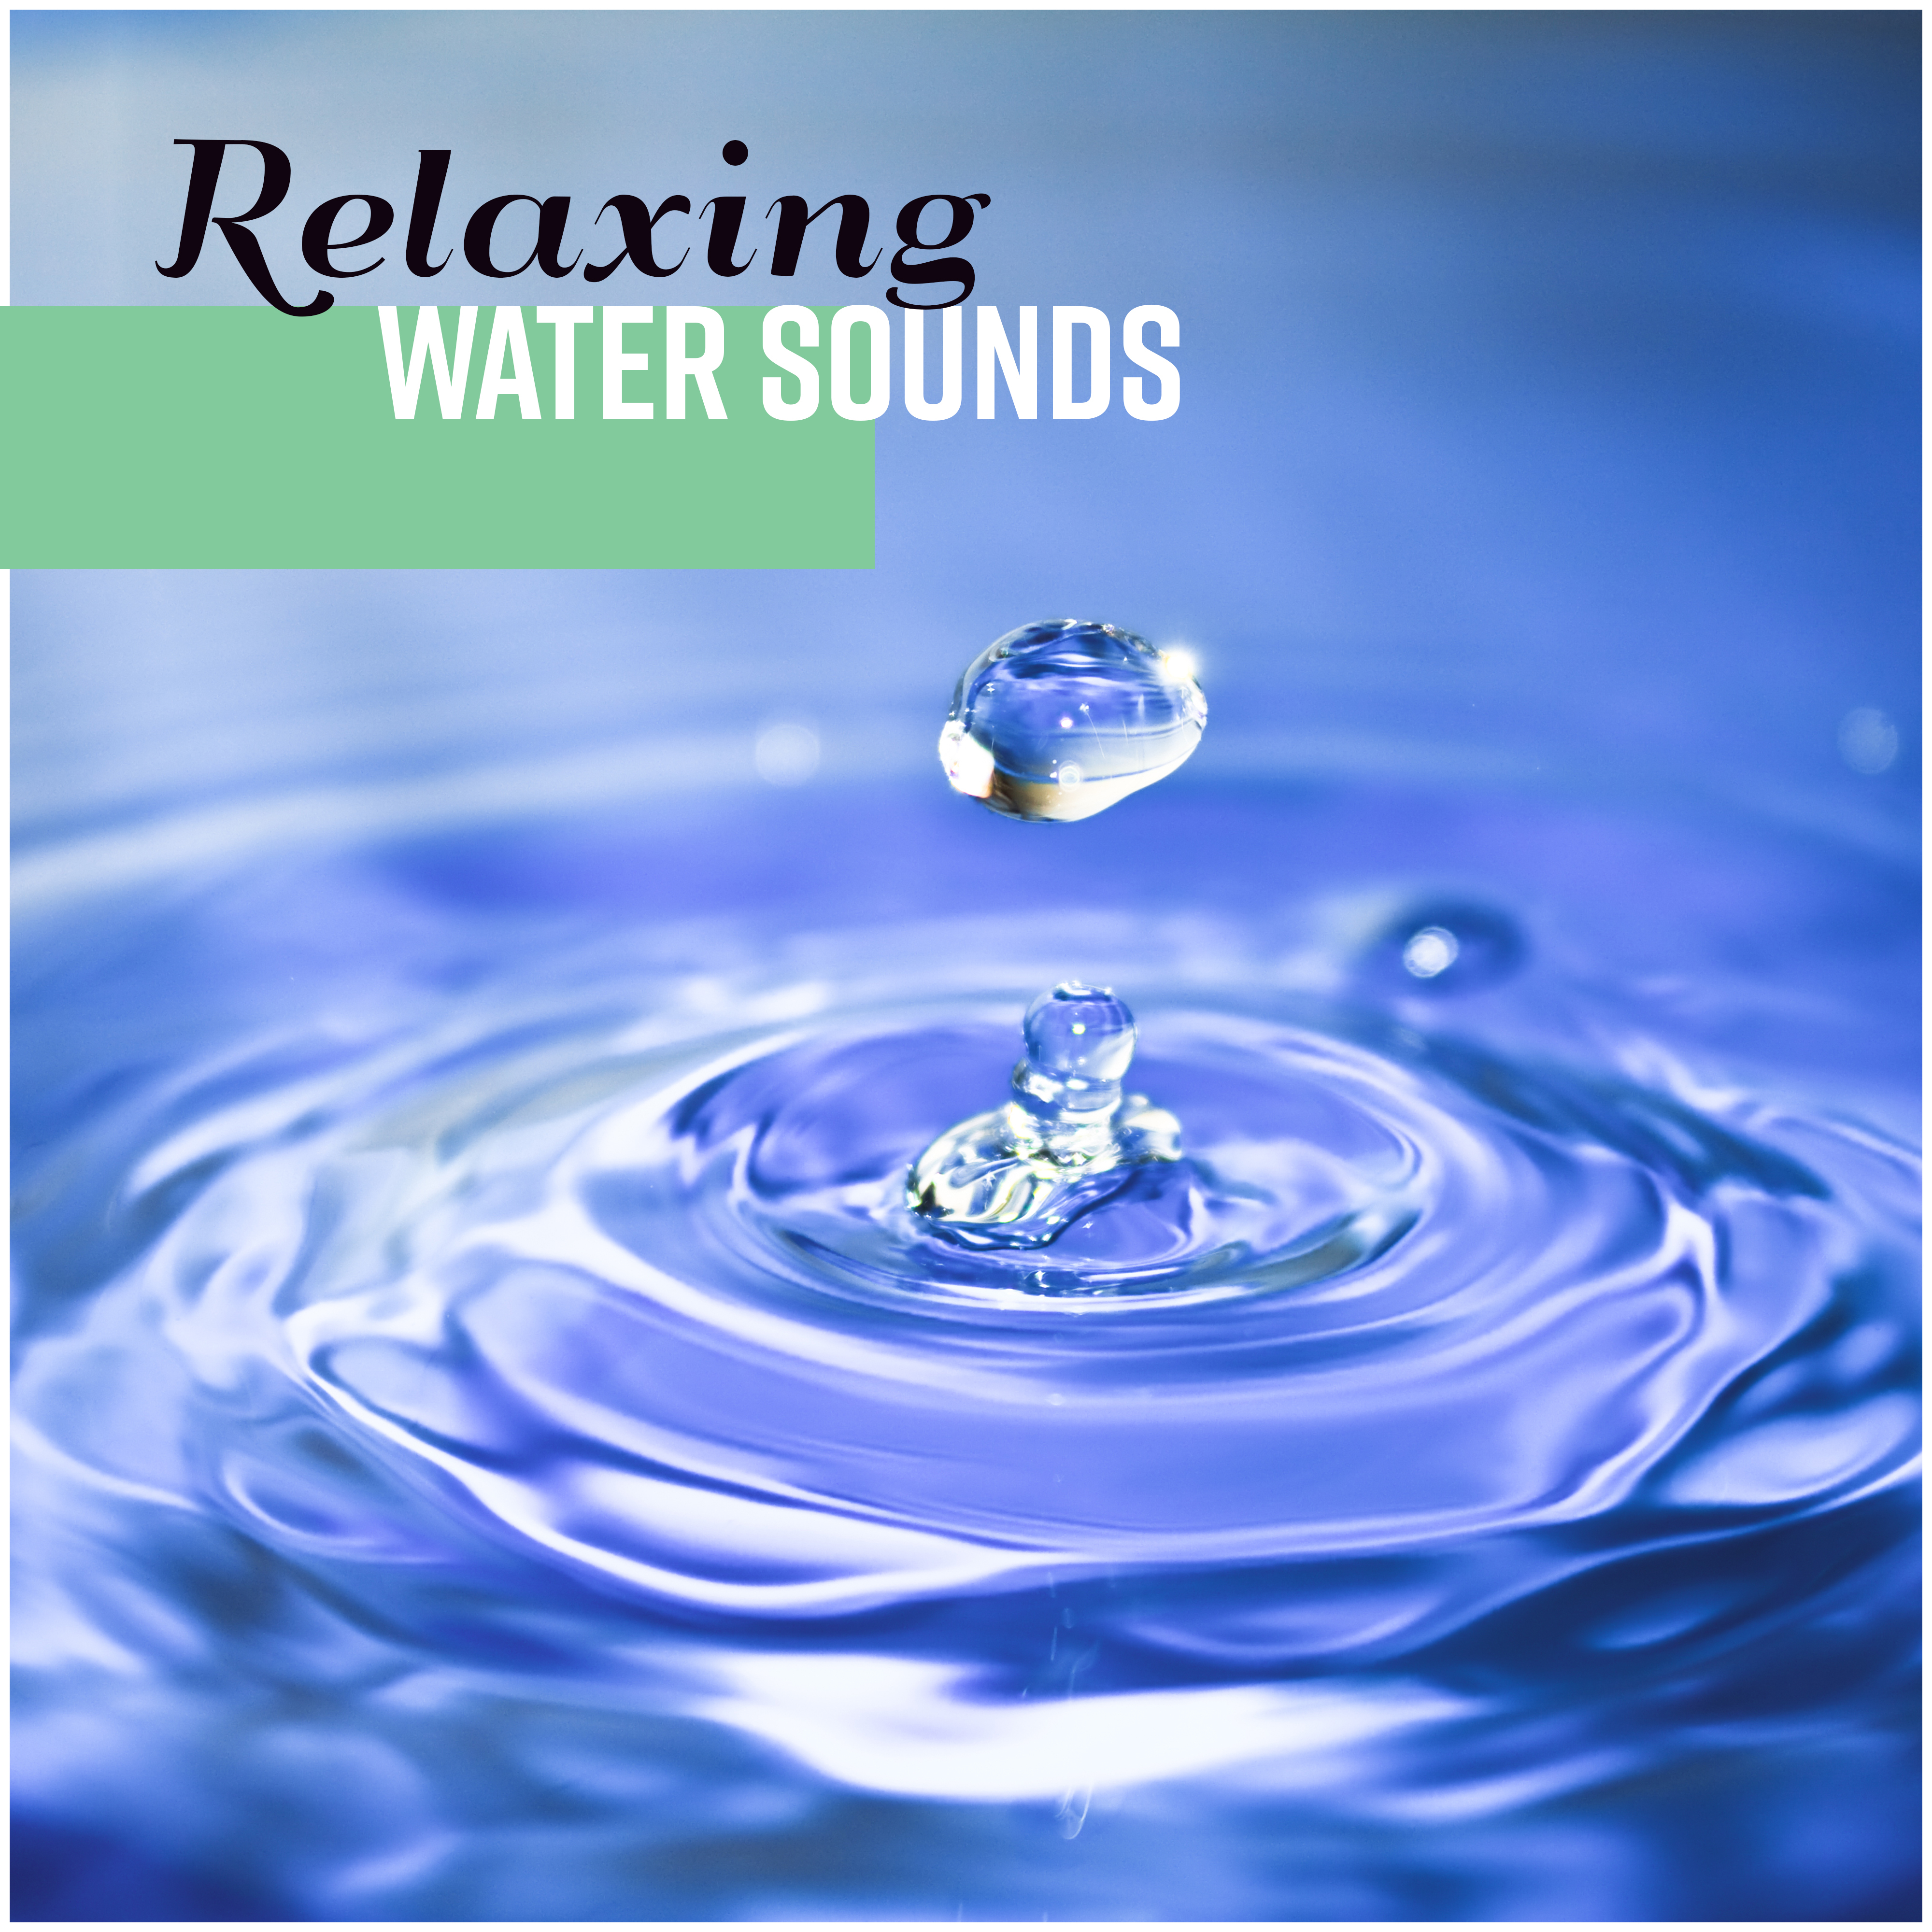 Relaxing Water Sounds 2018